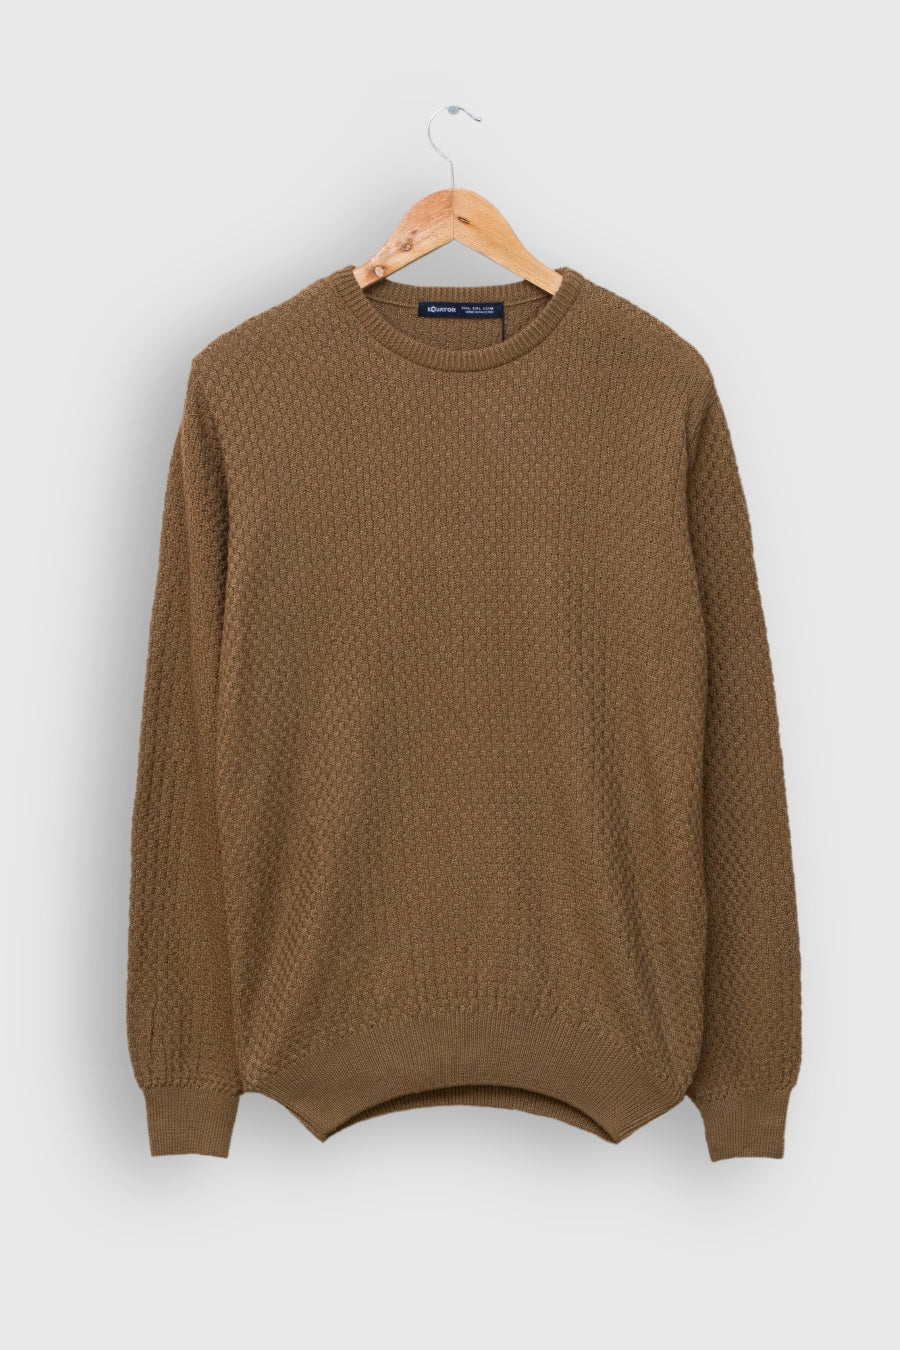 Khaki Knit Sweater Equator